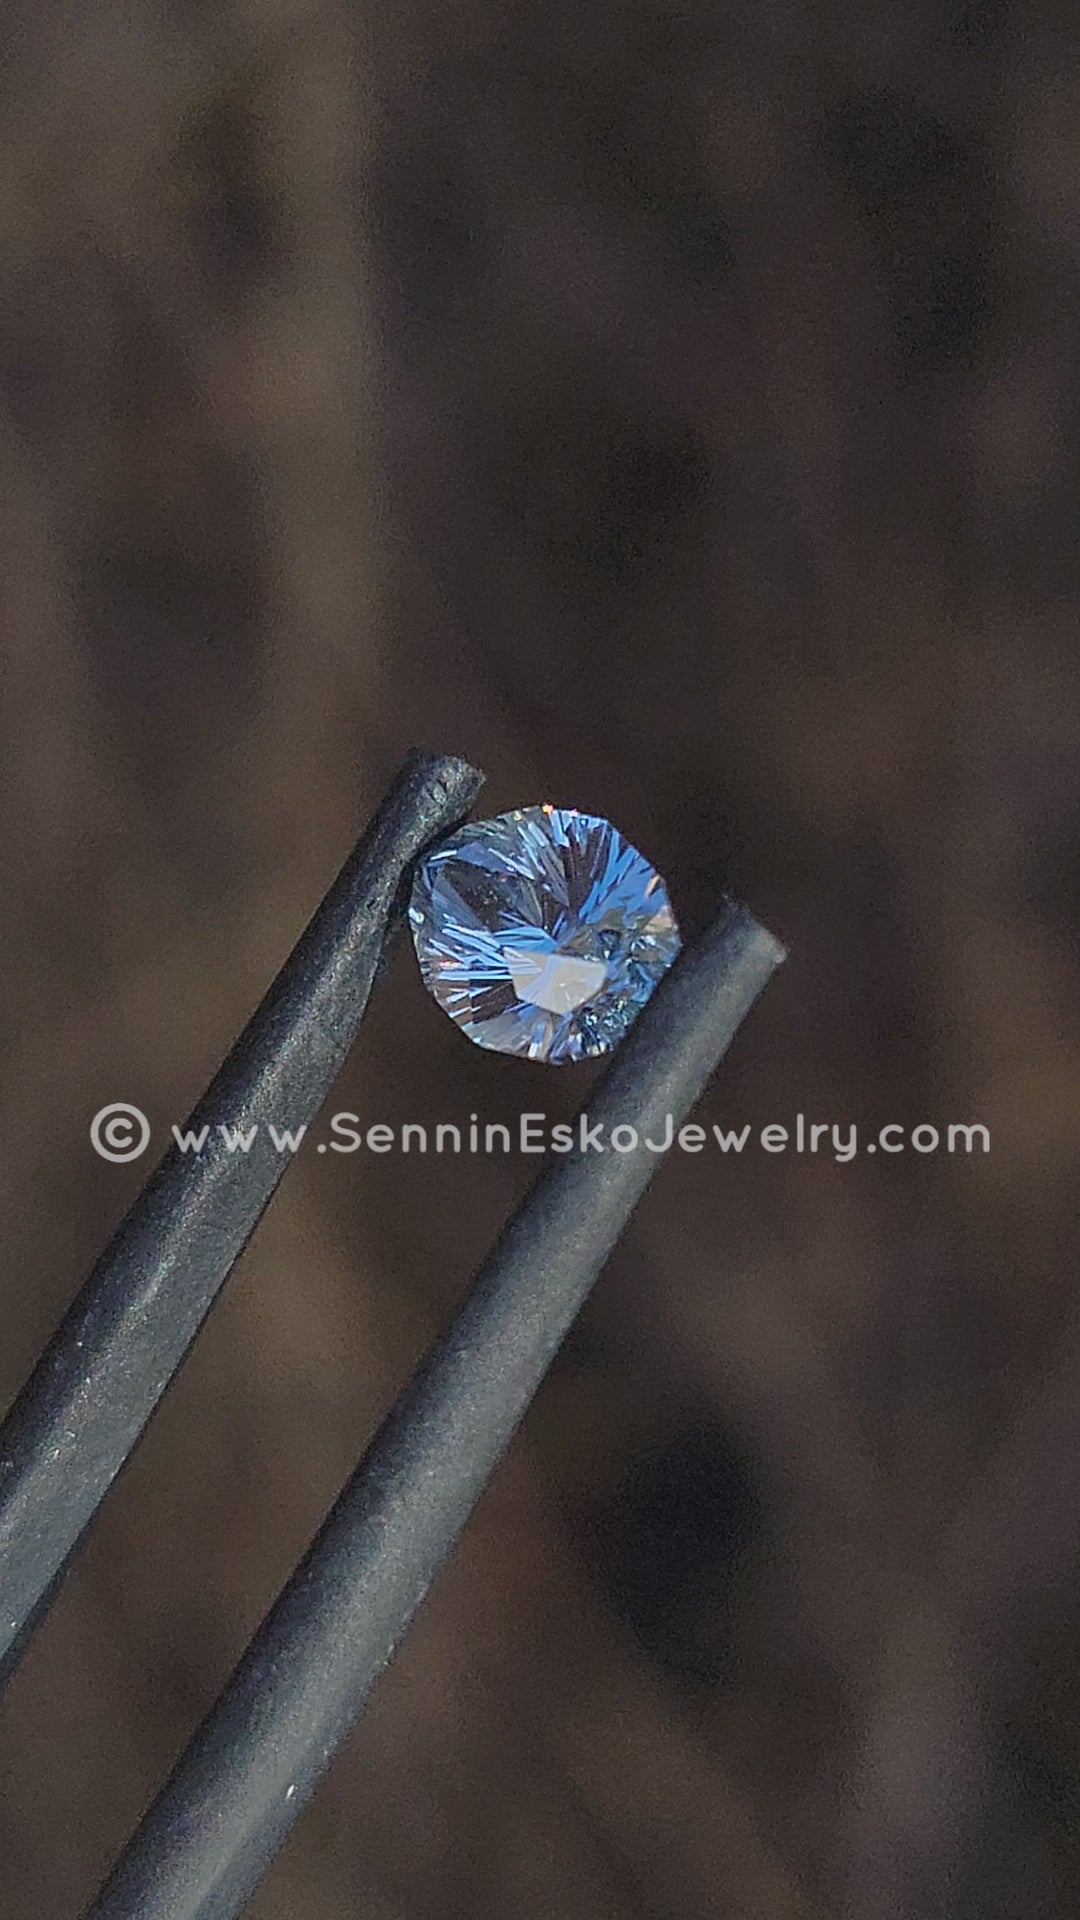 1.4 Carat Light Blue Sapphire Navette - Linear Galaxy Cut - 7.6x5.7mm